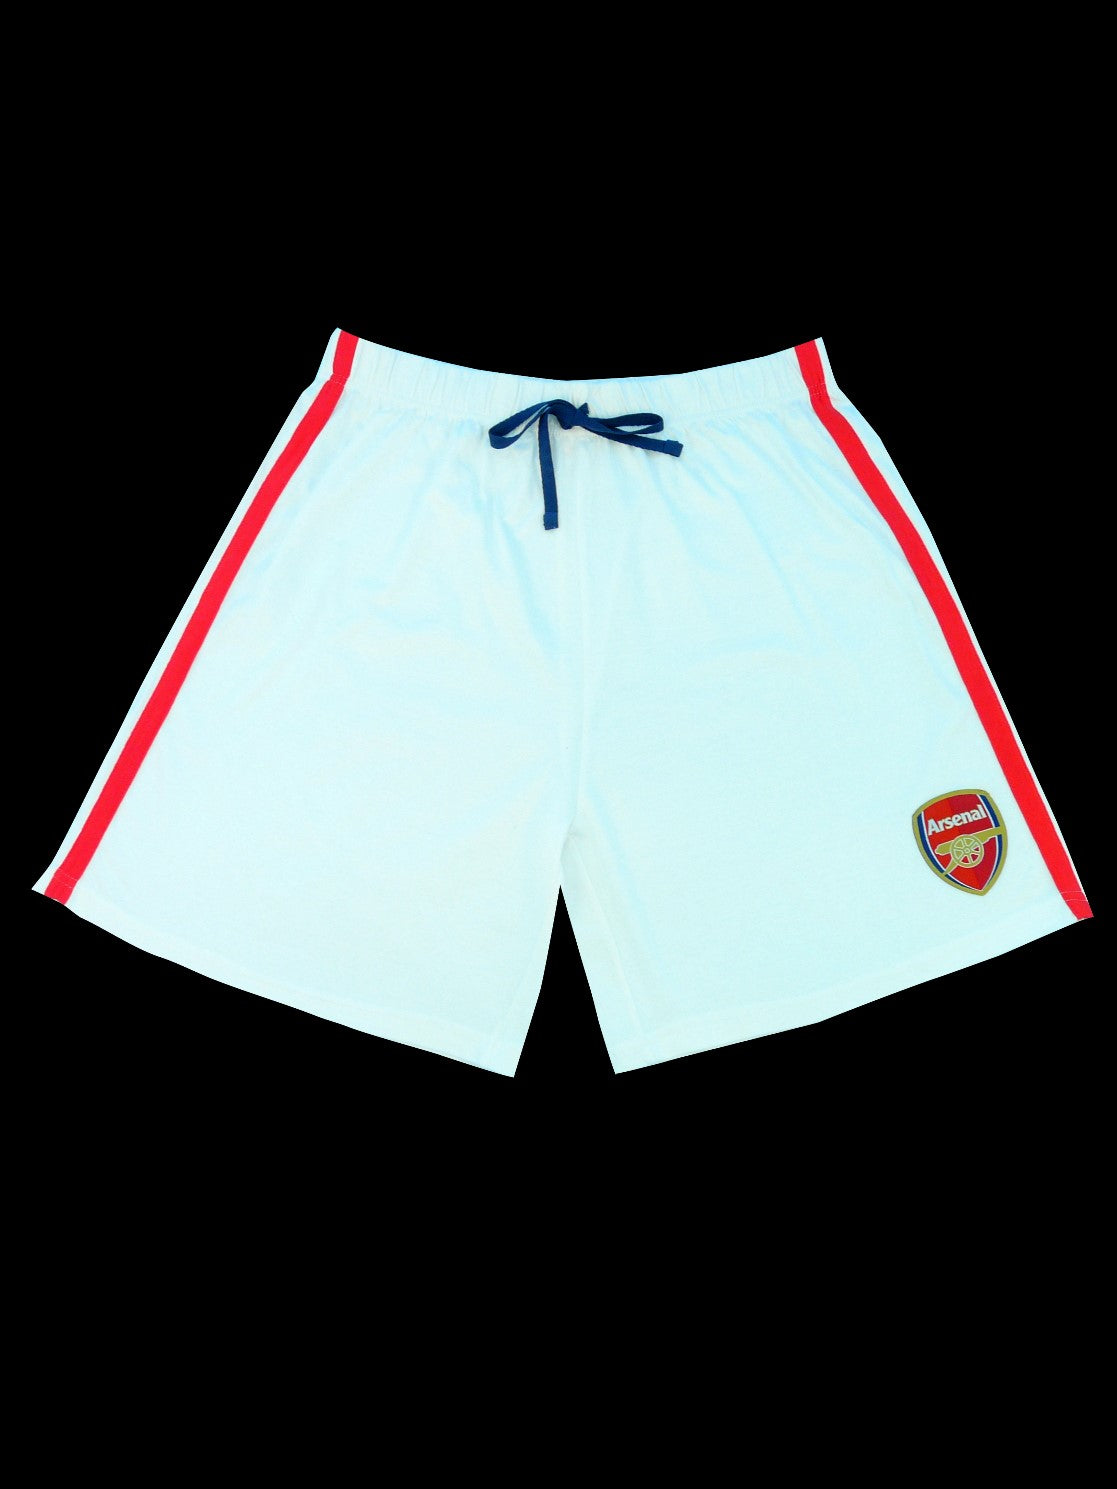 Arsenal Football Club Men's 100% Cotton Shortie Pyjama Set